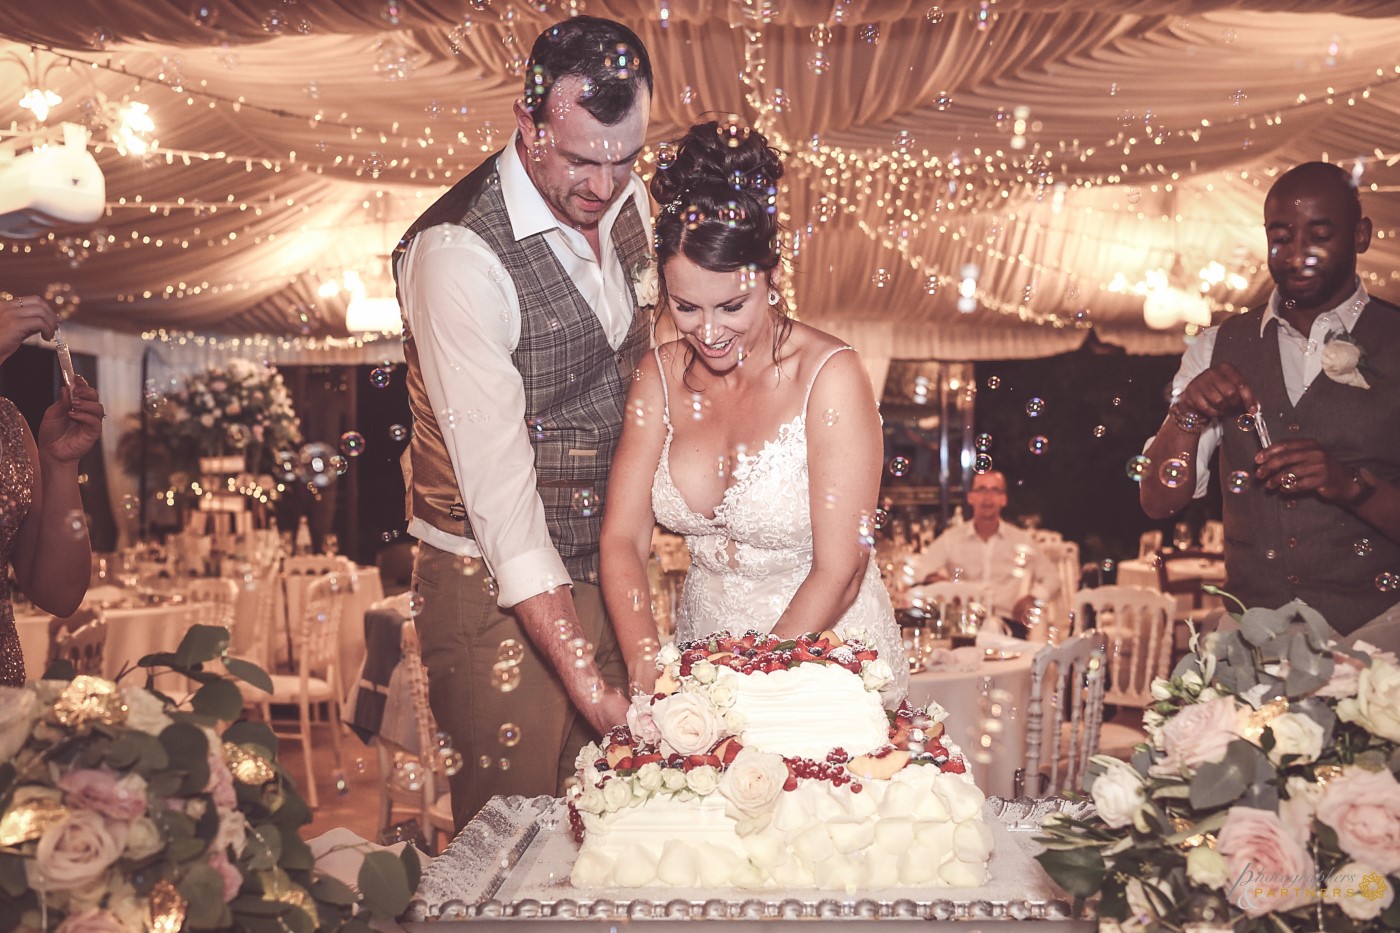 Cutting of the wedding cake 🍰